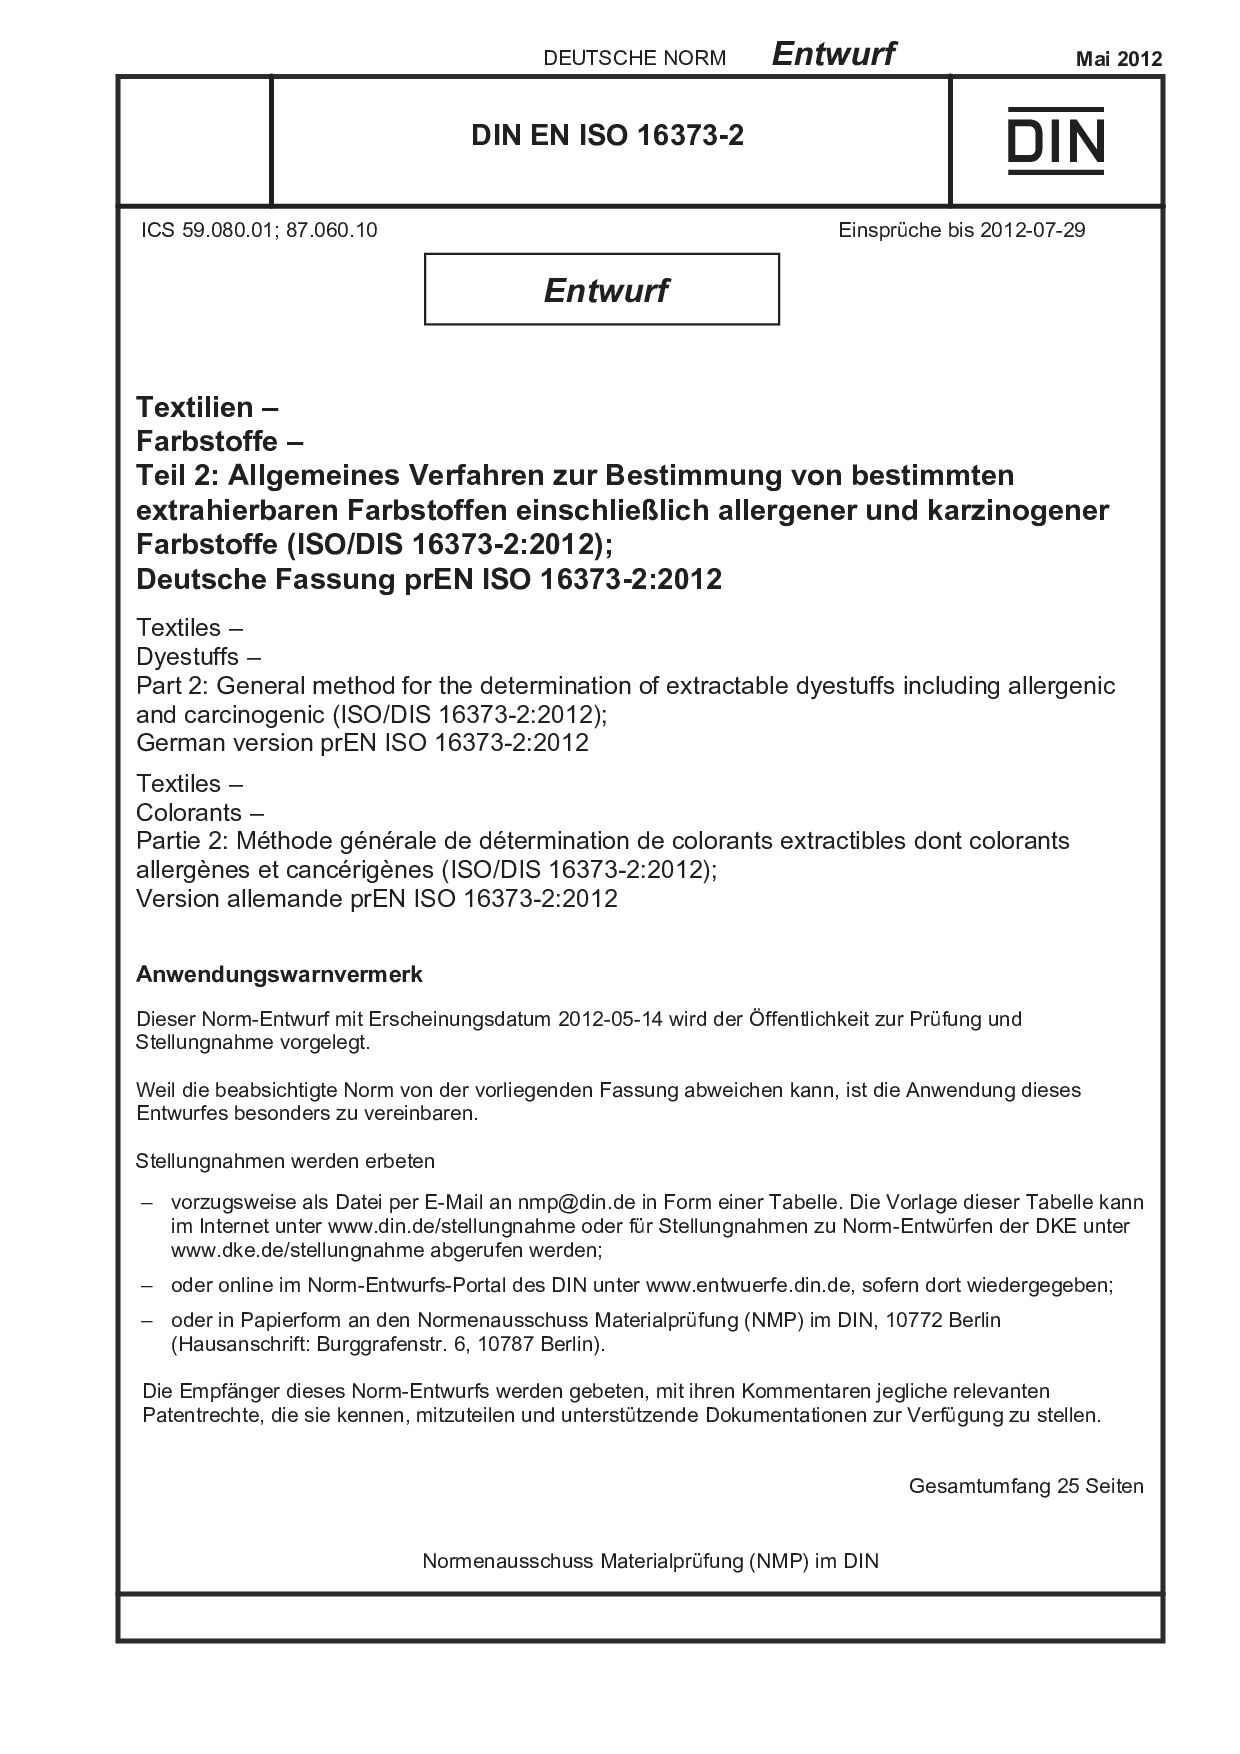 DIN EN ISO 16373-2 E:2012-05